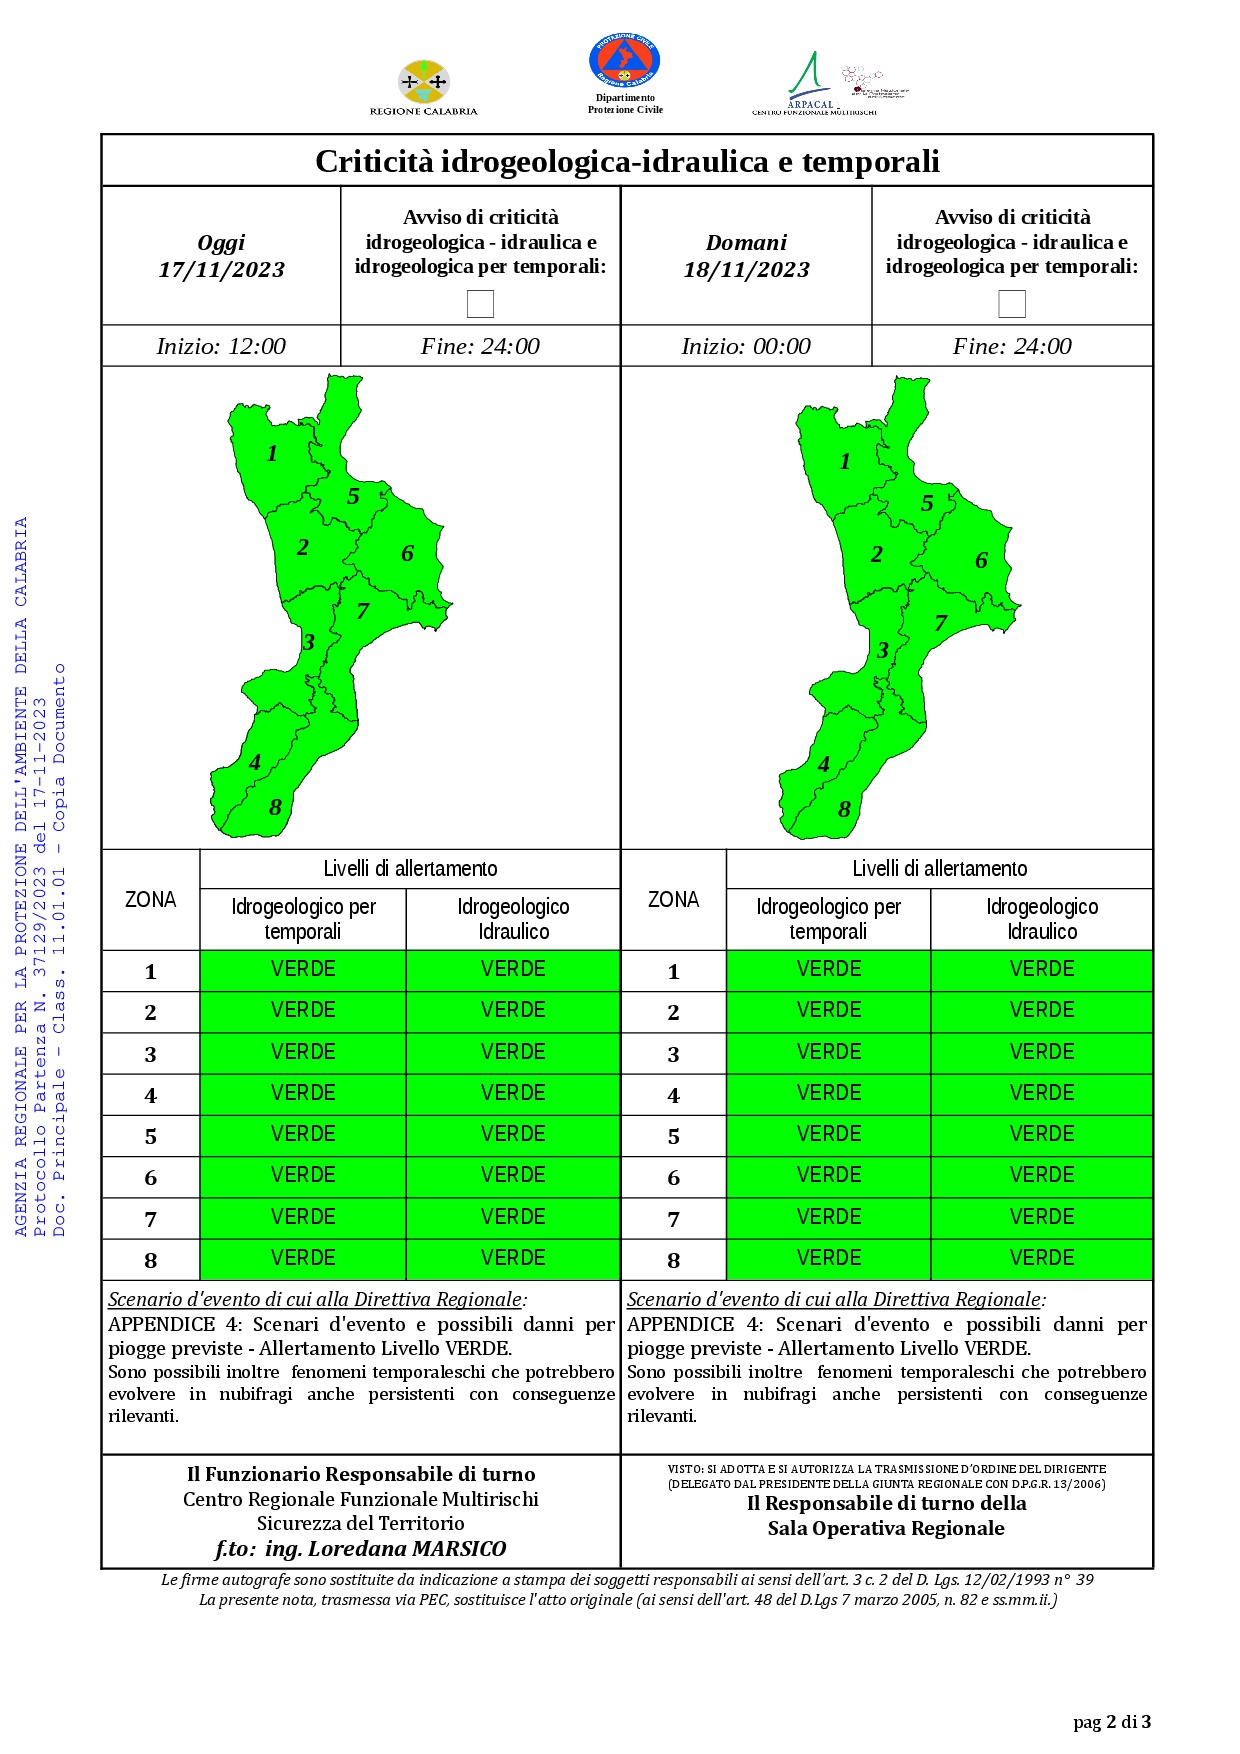 Criticità idrogeologica-idraulica e temporali in Calabria 17-11-2023